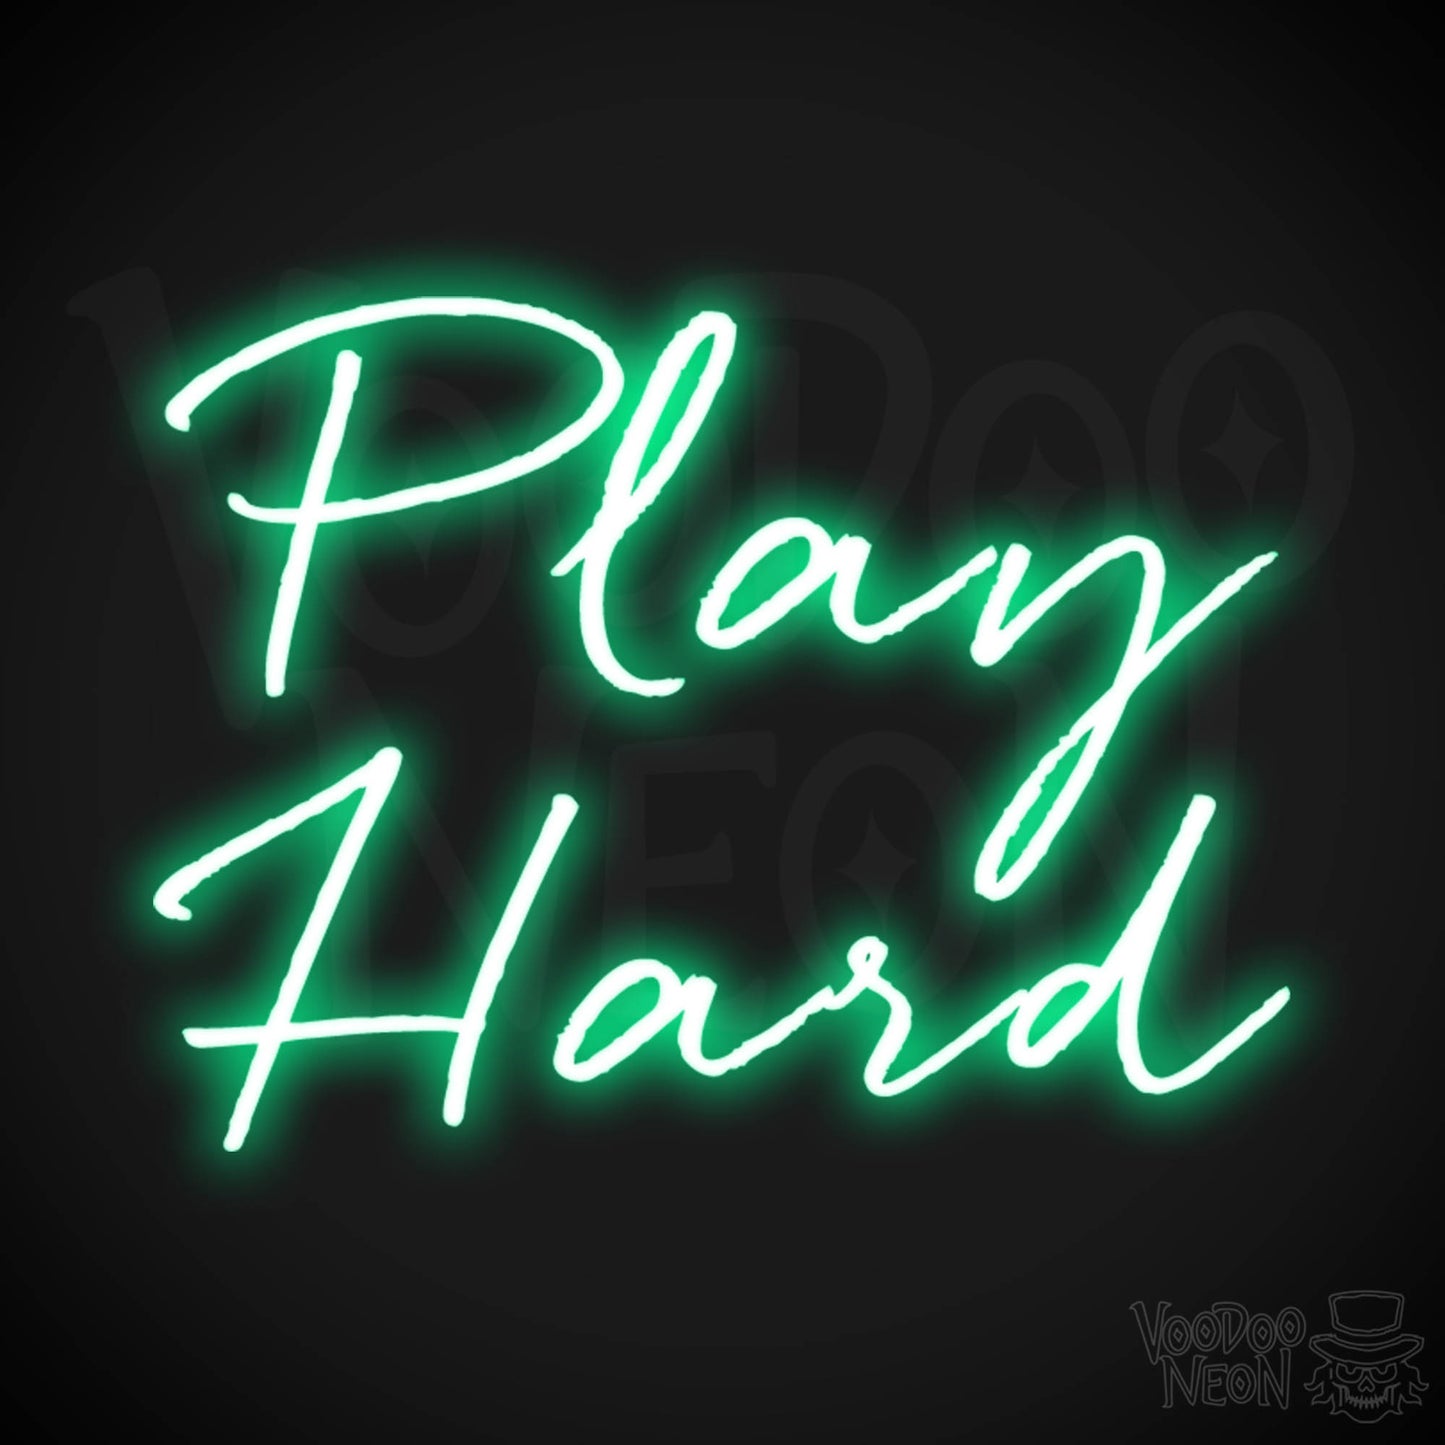 Play Hard Neon Sign - Neon Play Hard Sign - Play Hard LED Sign - Color Green